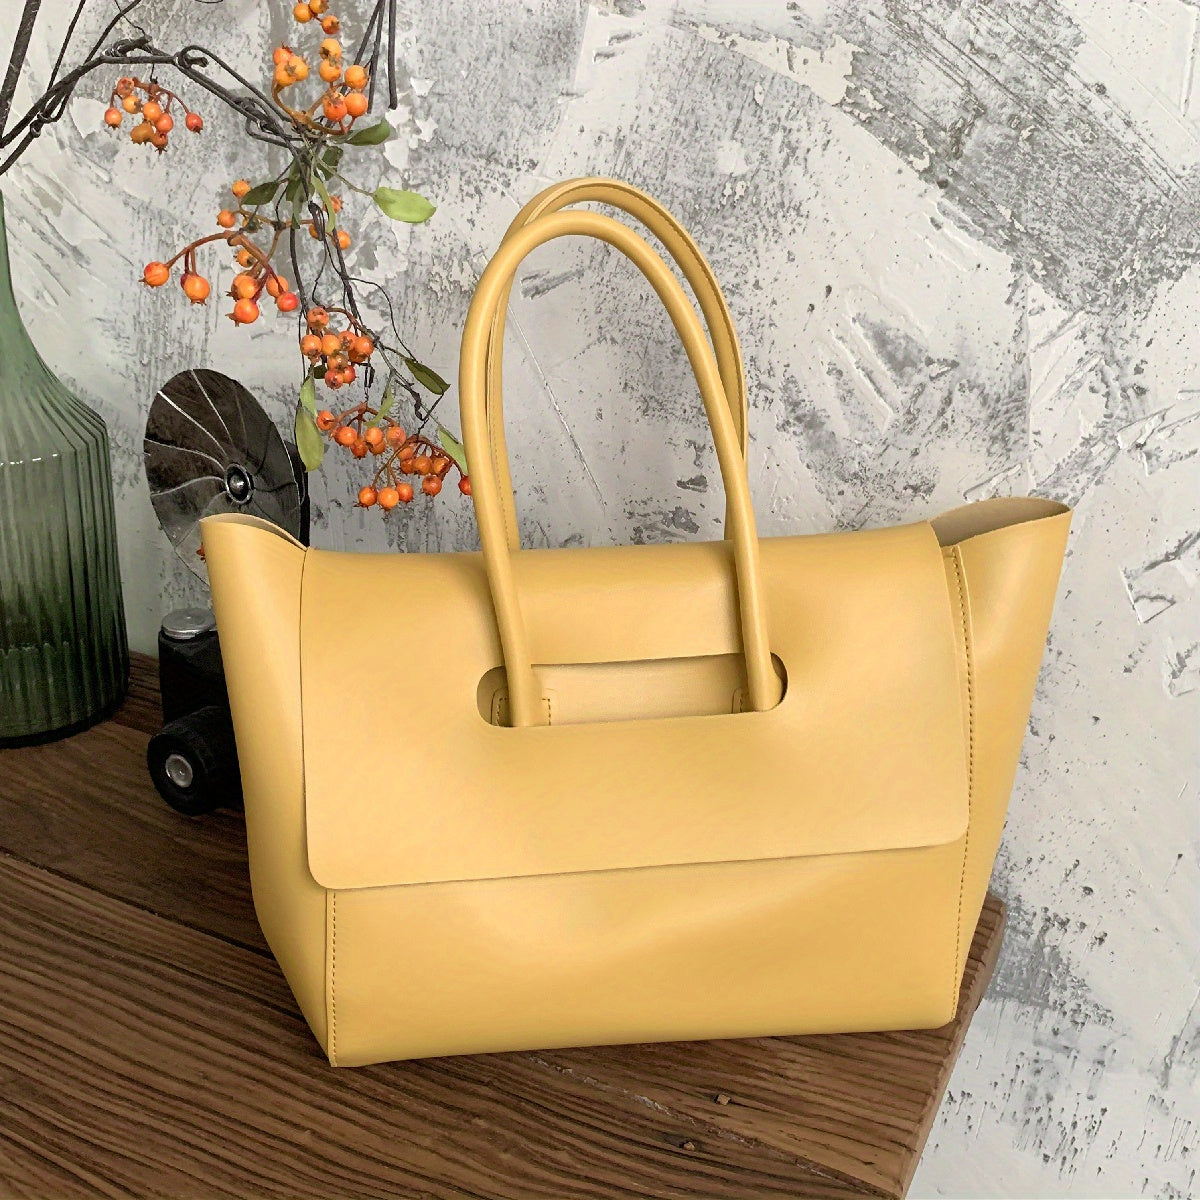 Large Capacity Tote Bag For Women, Vegan Leather Satchel Purse, Simple Solid Color Shoulder Bag For Shopping & Commuting